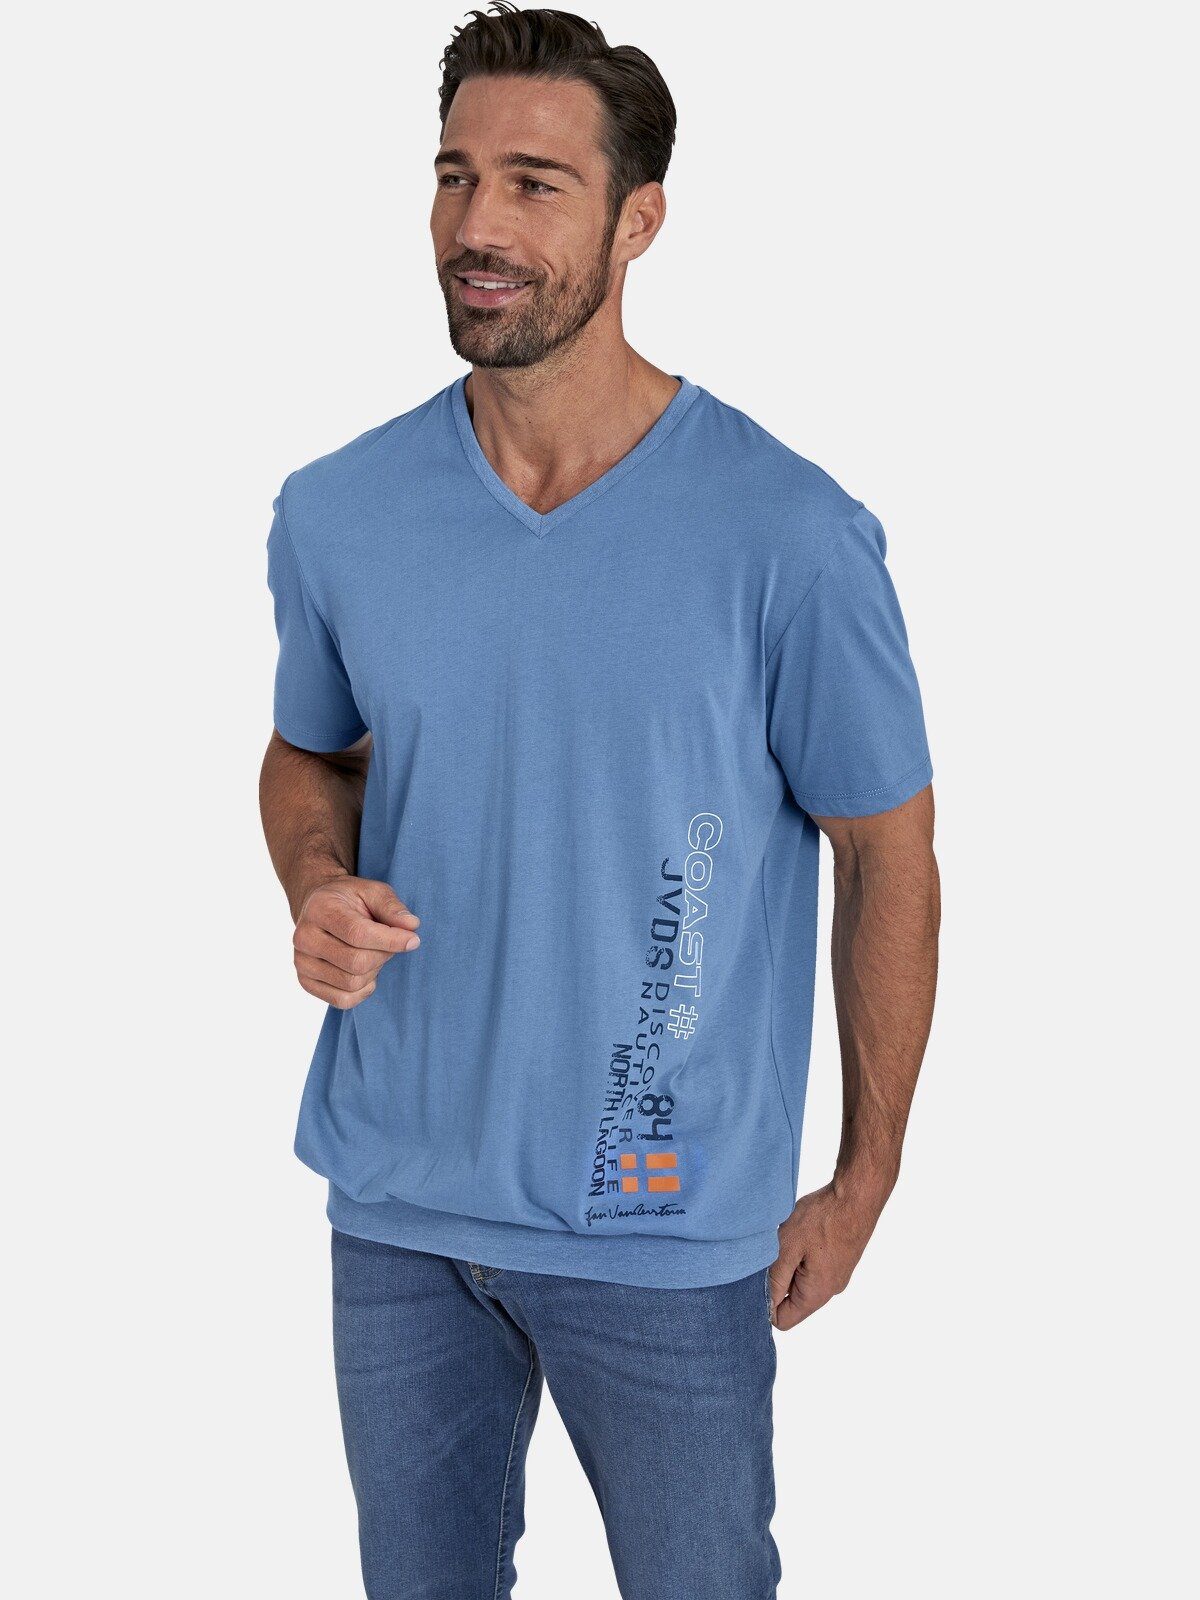 Jan Vanderstorm T-Shirt GILBRECHT +Fit Kollektion, Comfort Fit blau